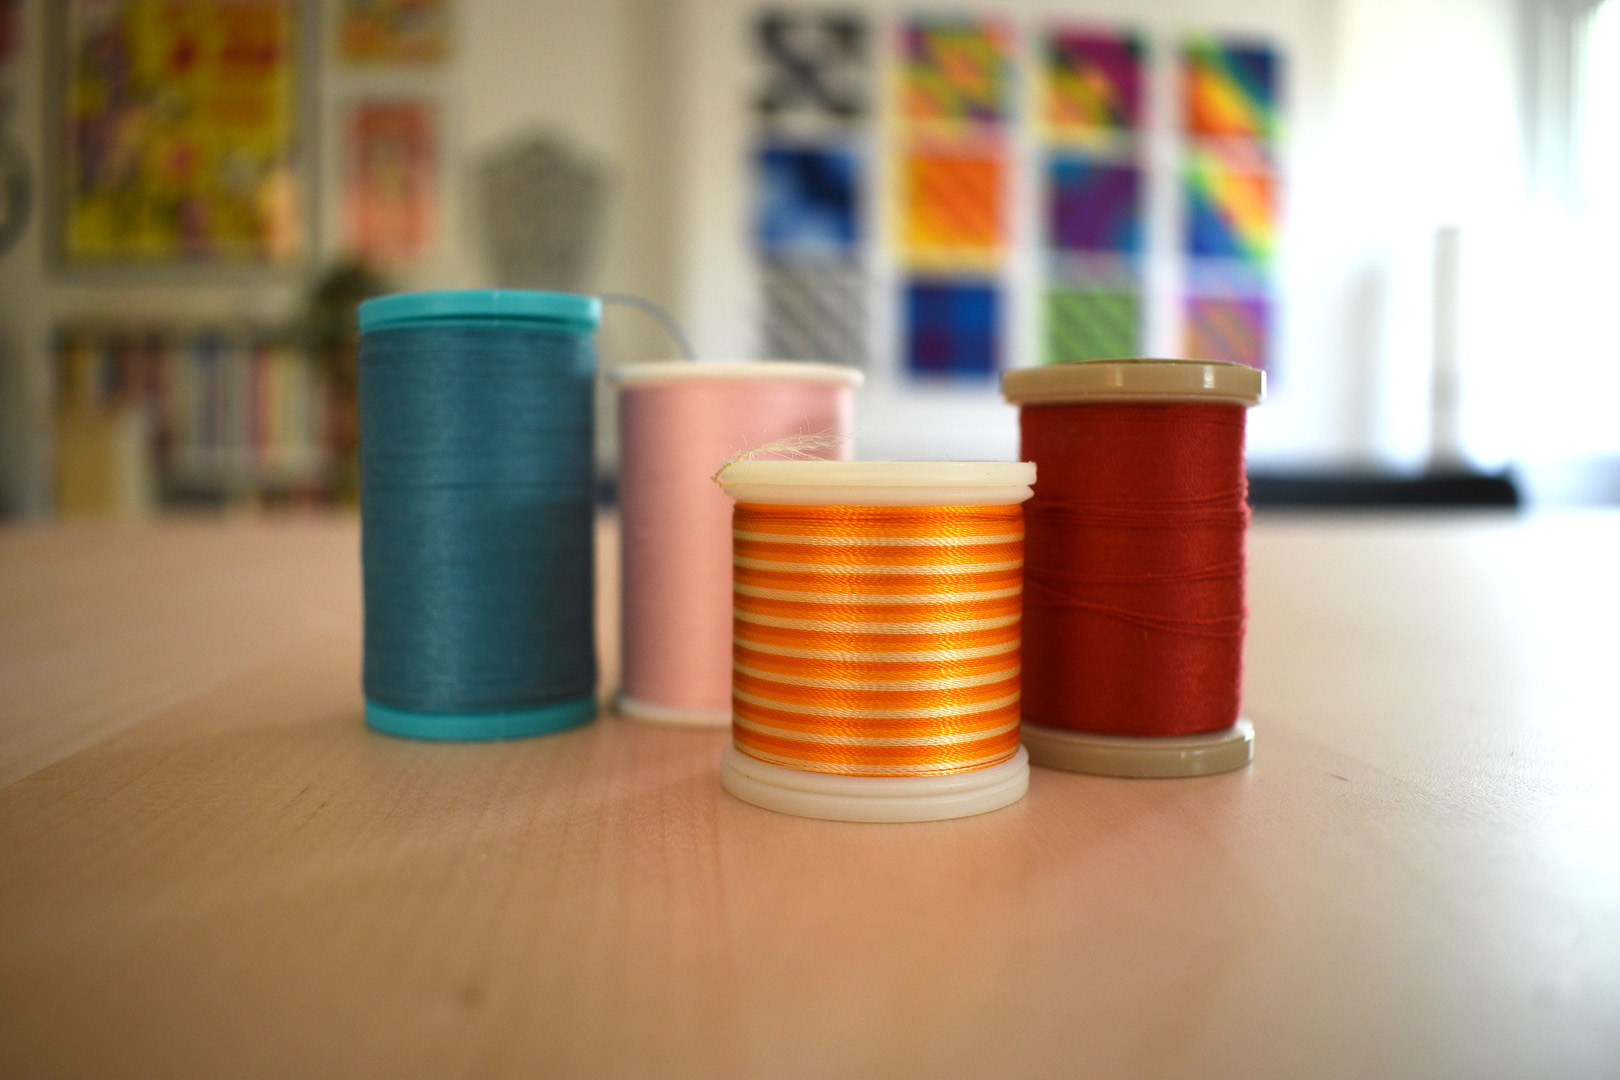 Spool Invisible Thread, Simthread Sewing Thread